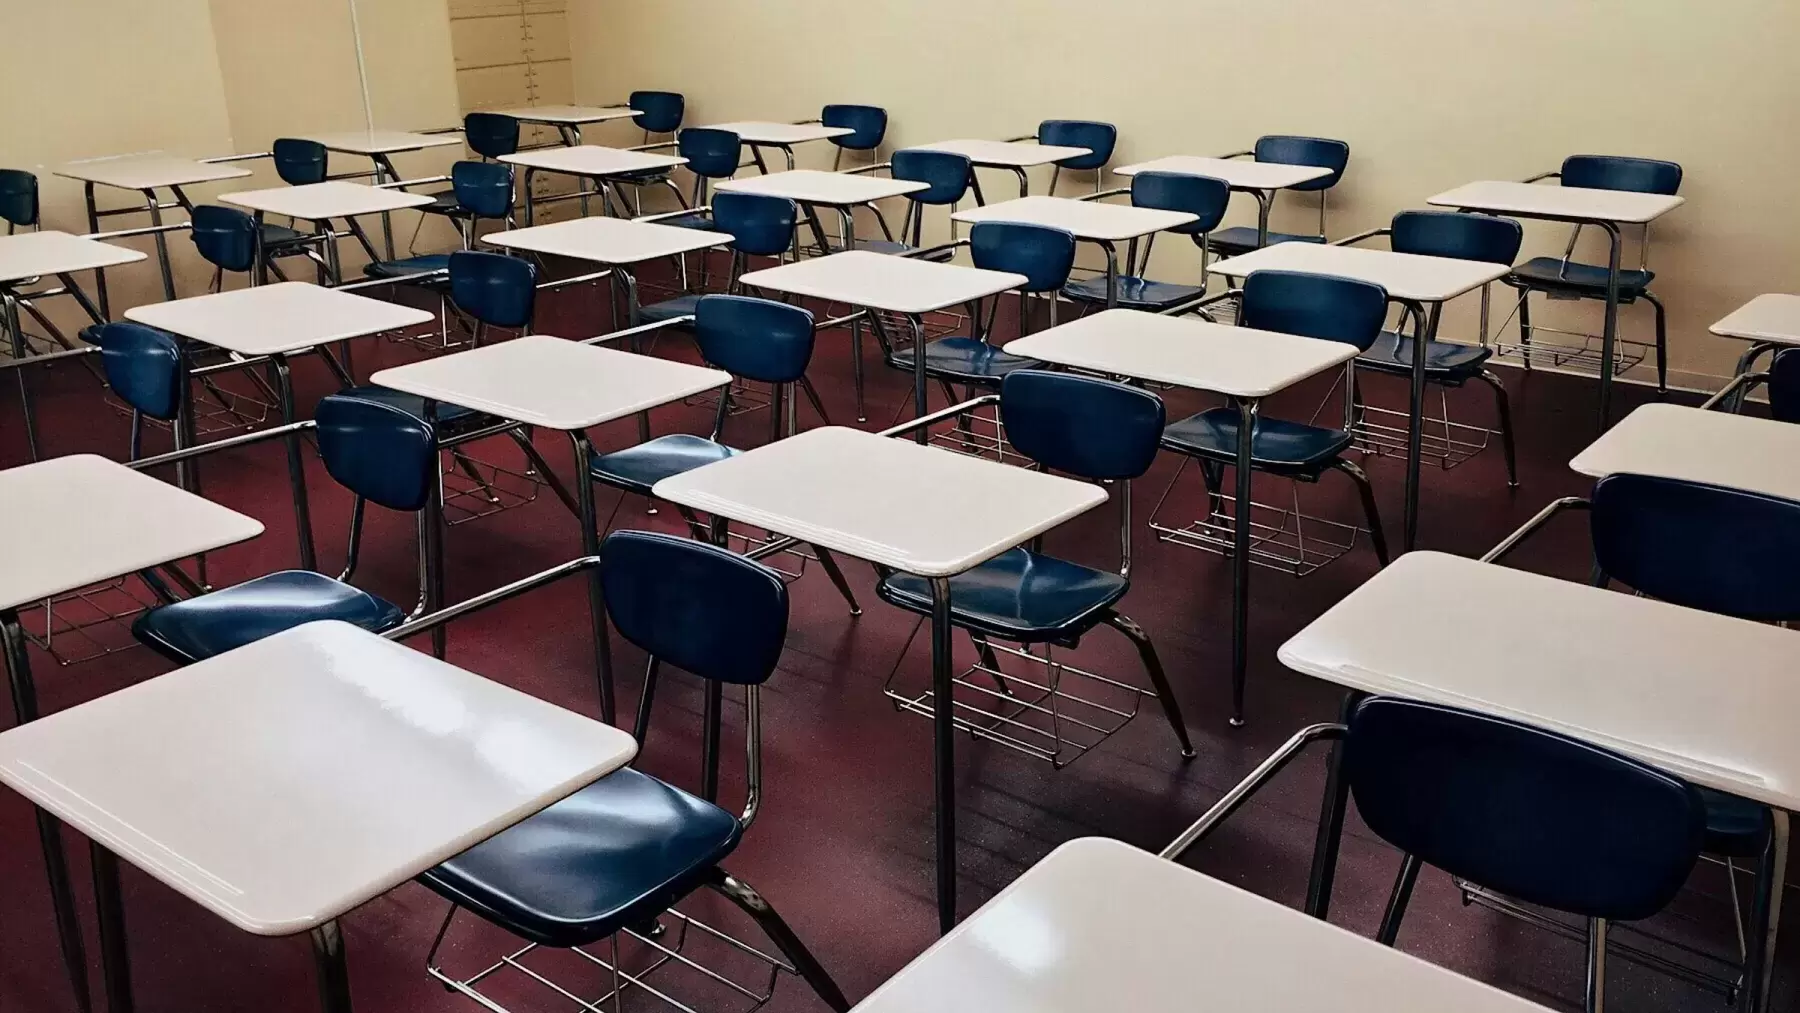 classroom full of empty desks